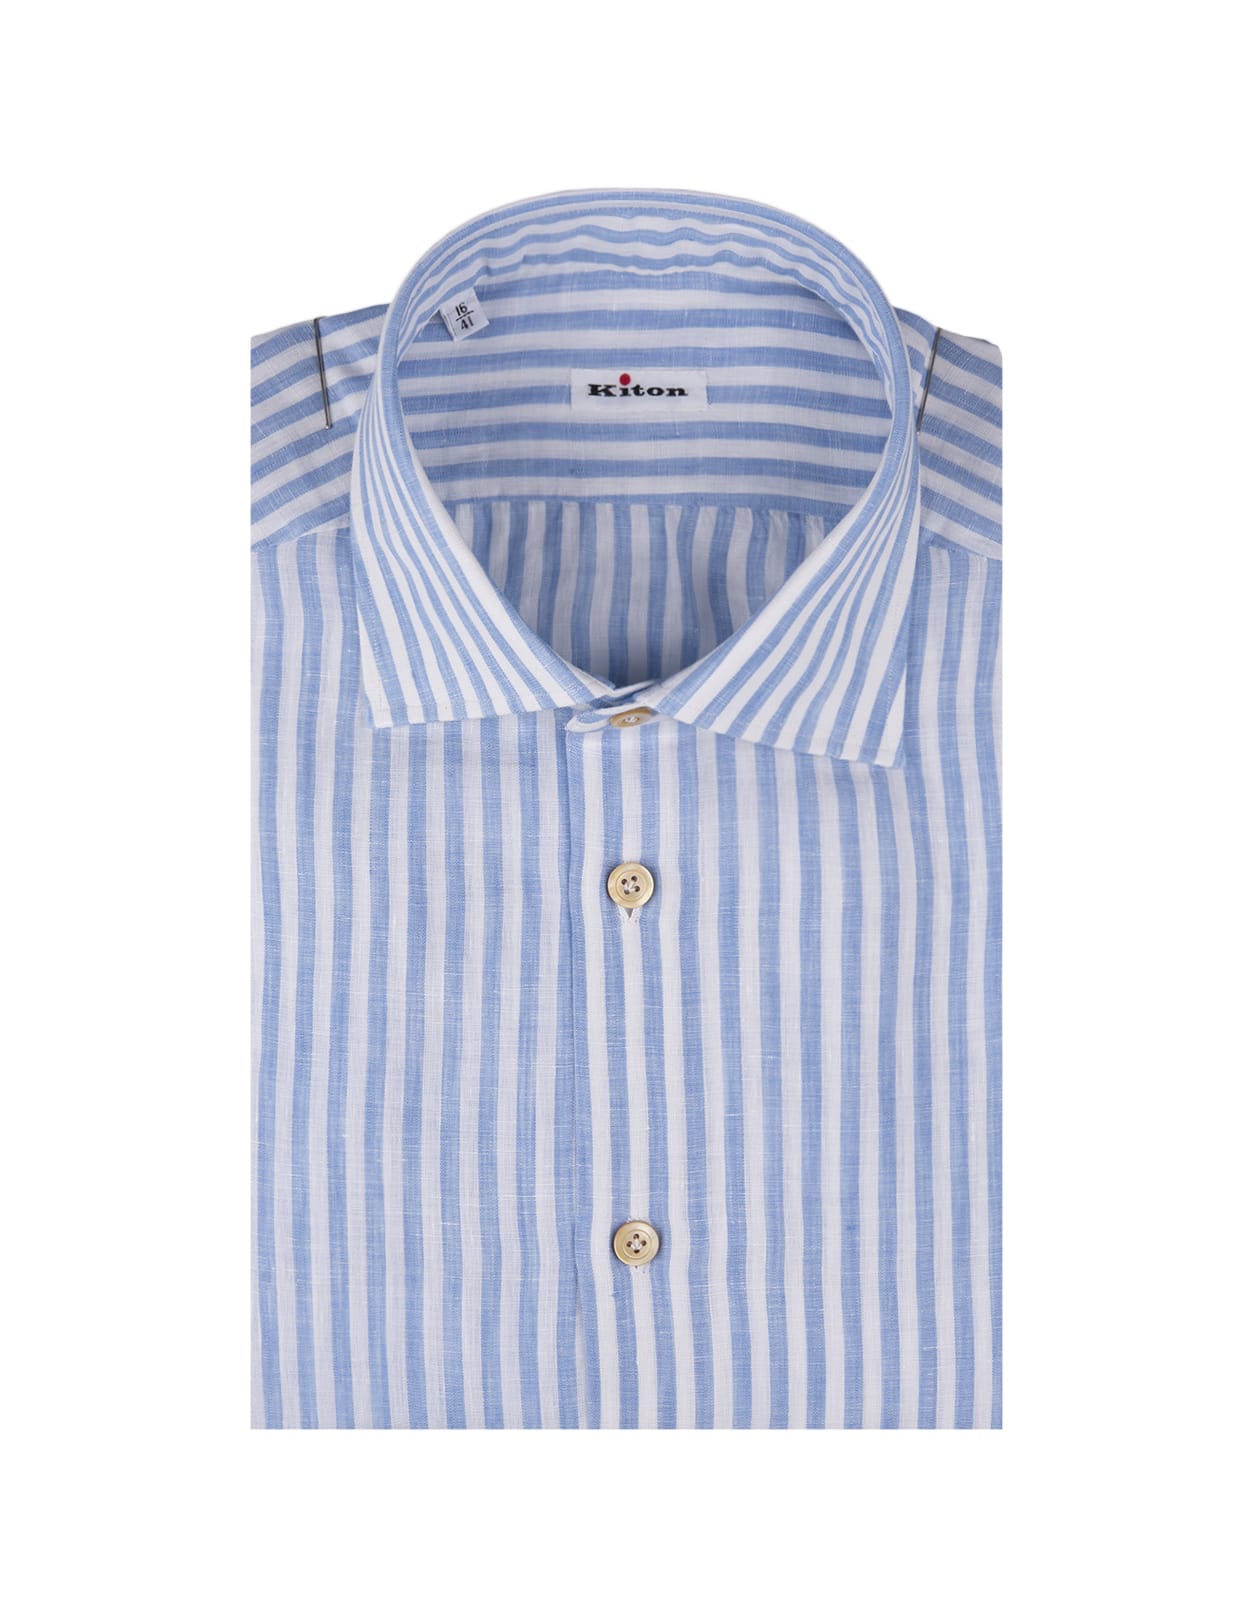 Shop Kiton Light Blue Striped Linen Shirt